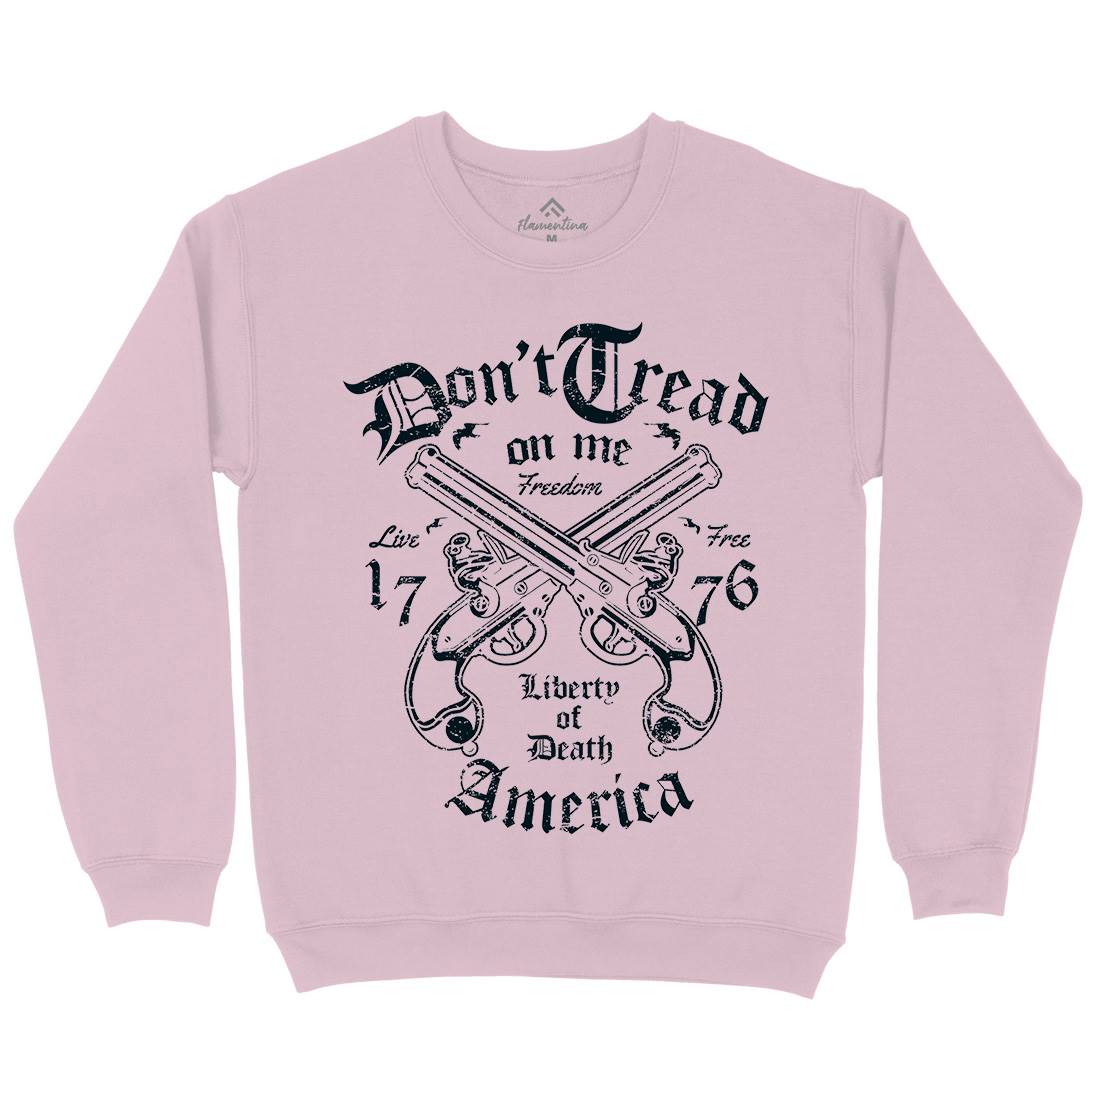 Liberty Of Death Kids Crew Neck Sweatshirt American A084